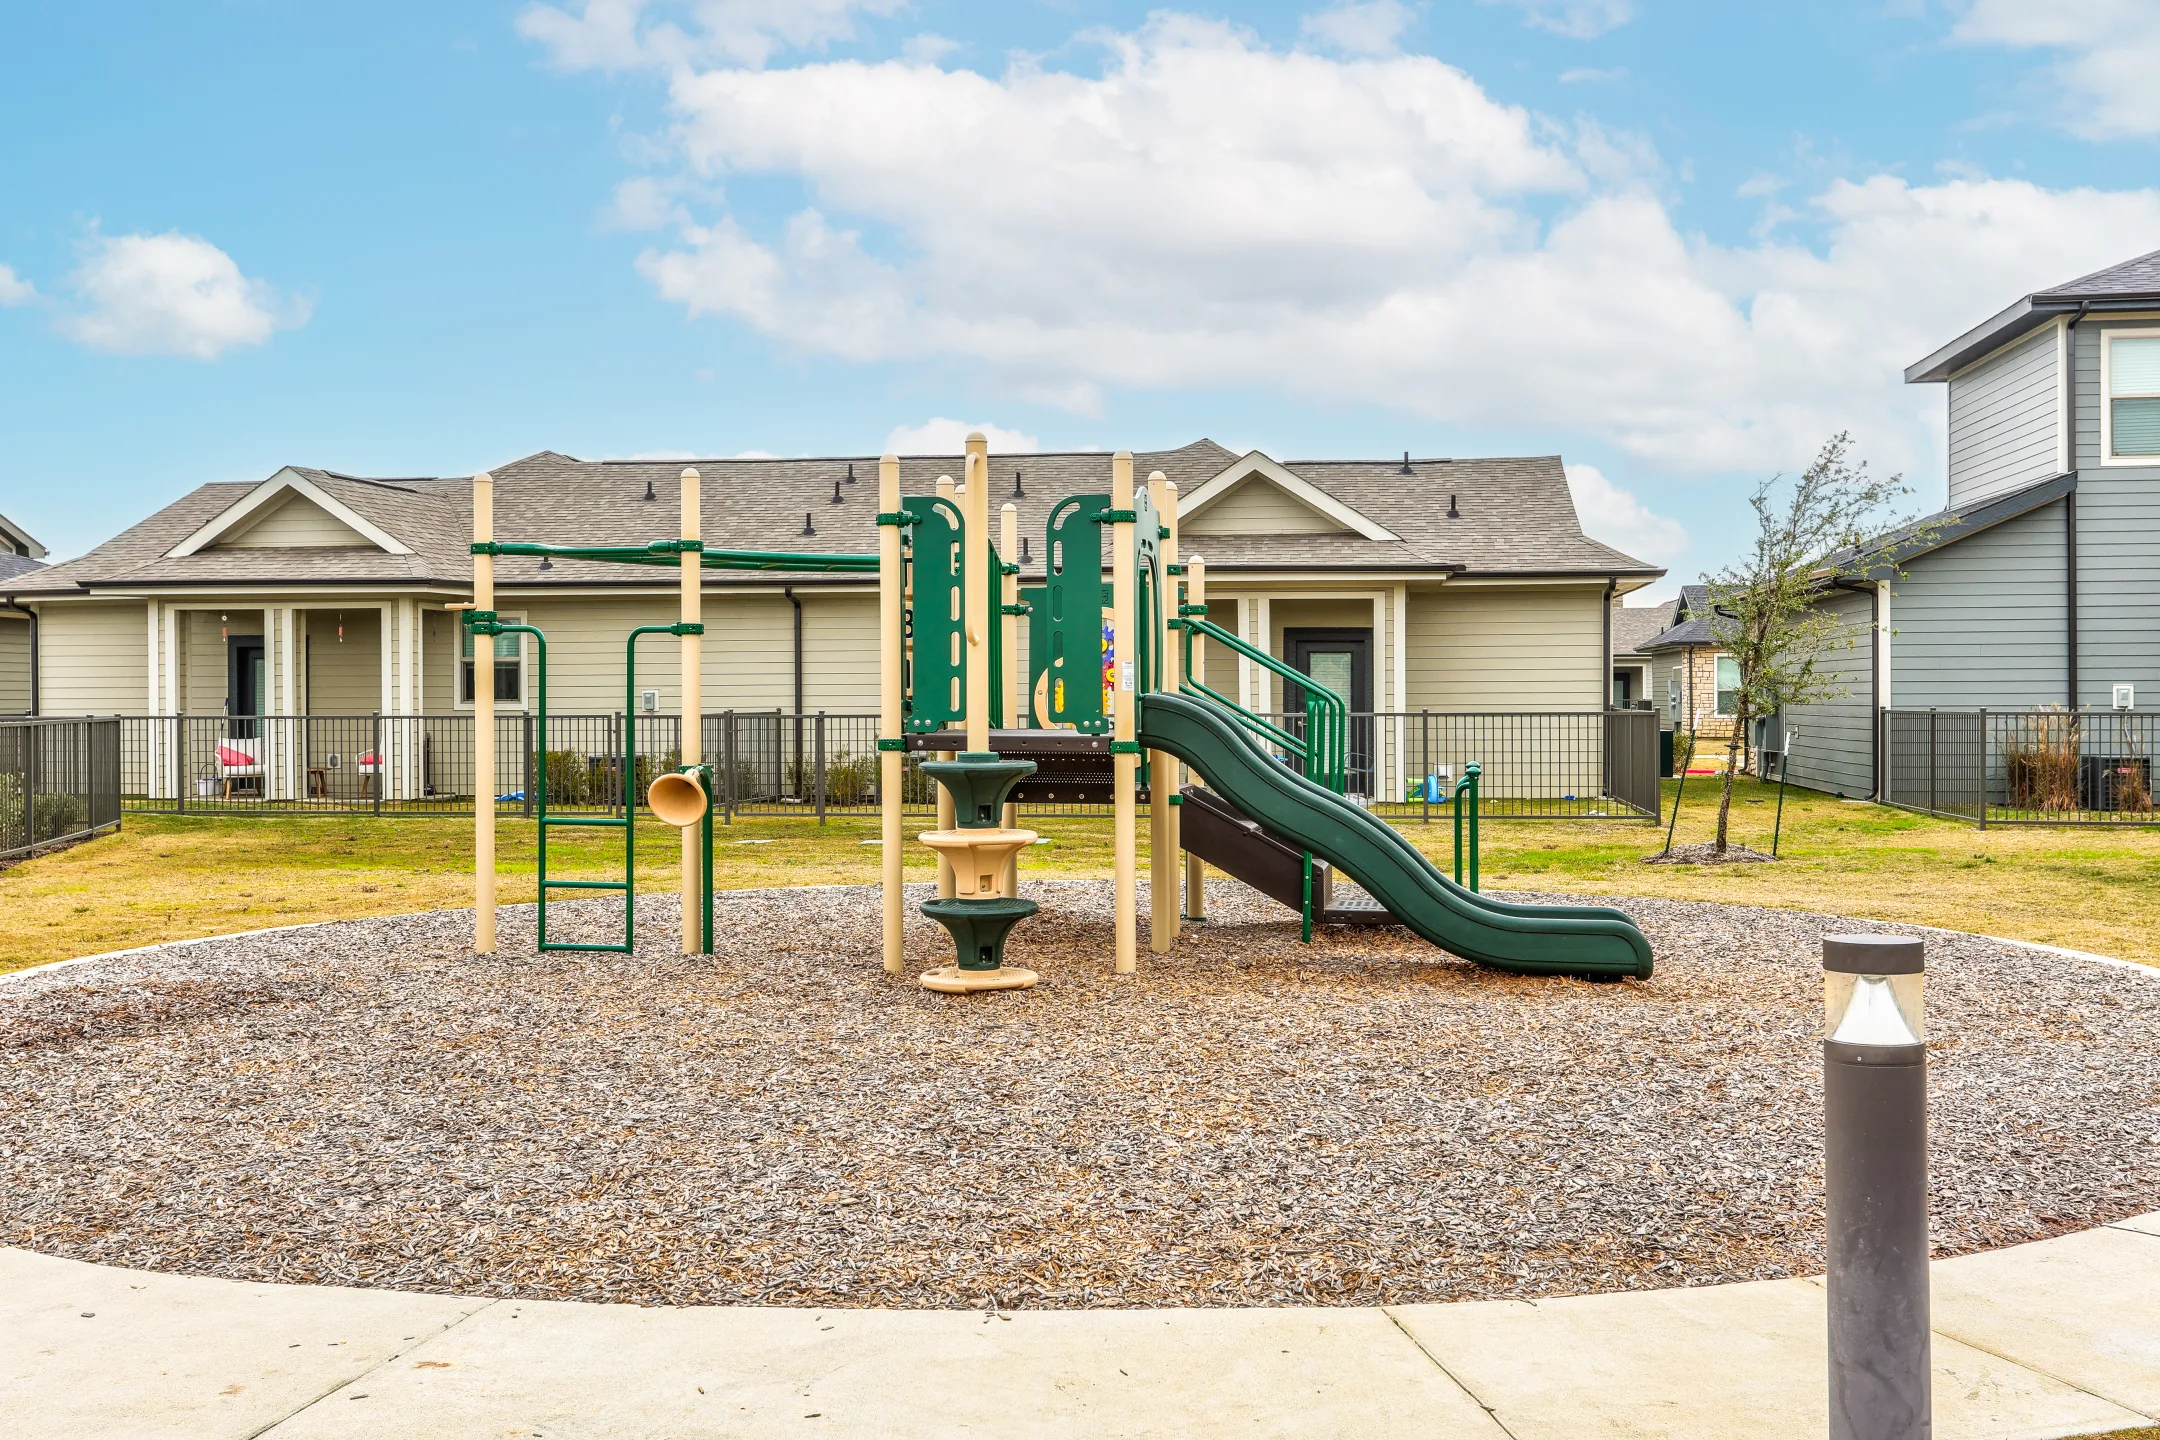 Playground - Home at Waller - Waller, TX